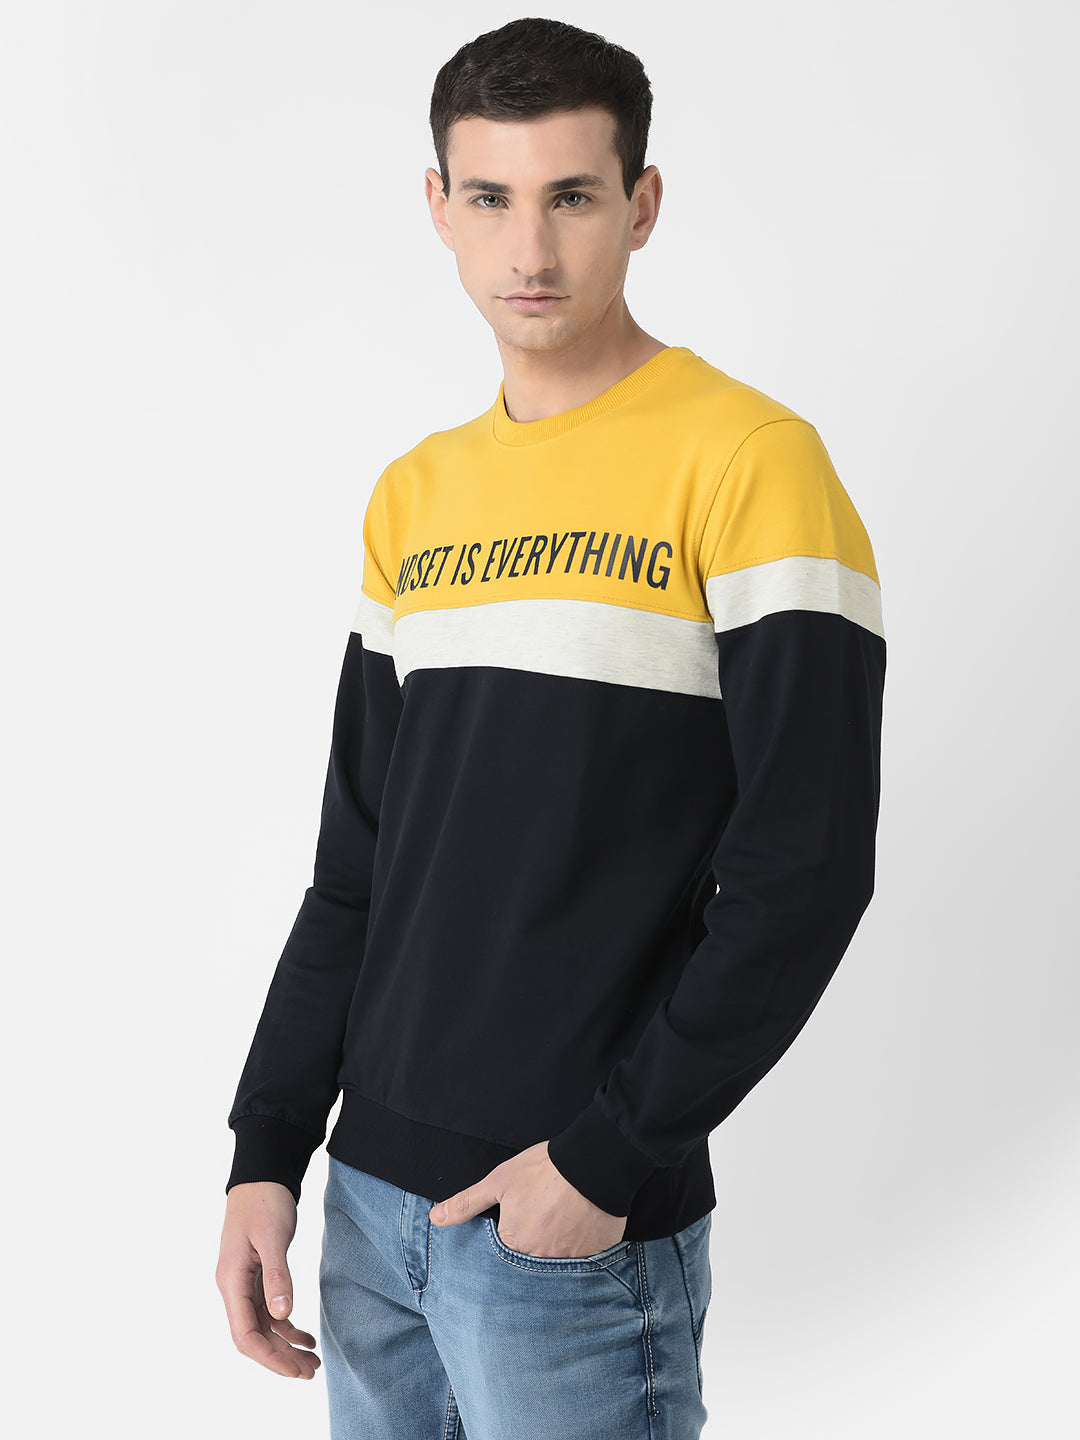  Mustard Colour-Blocked Mindset Sweatshirt